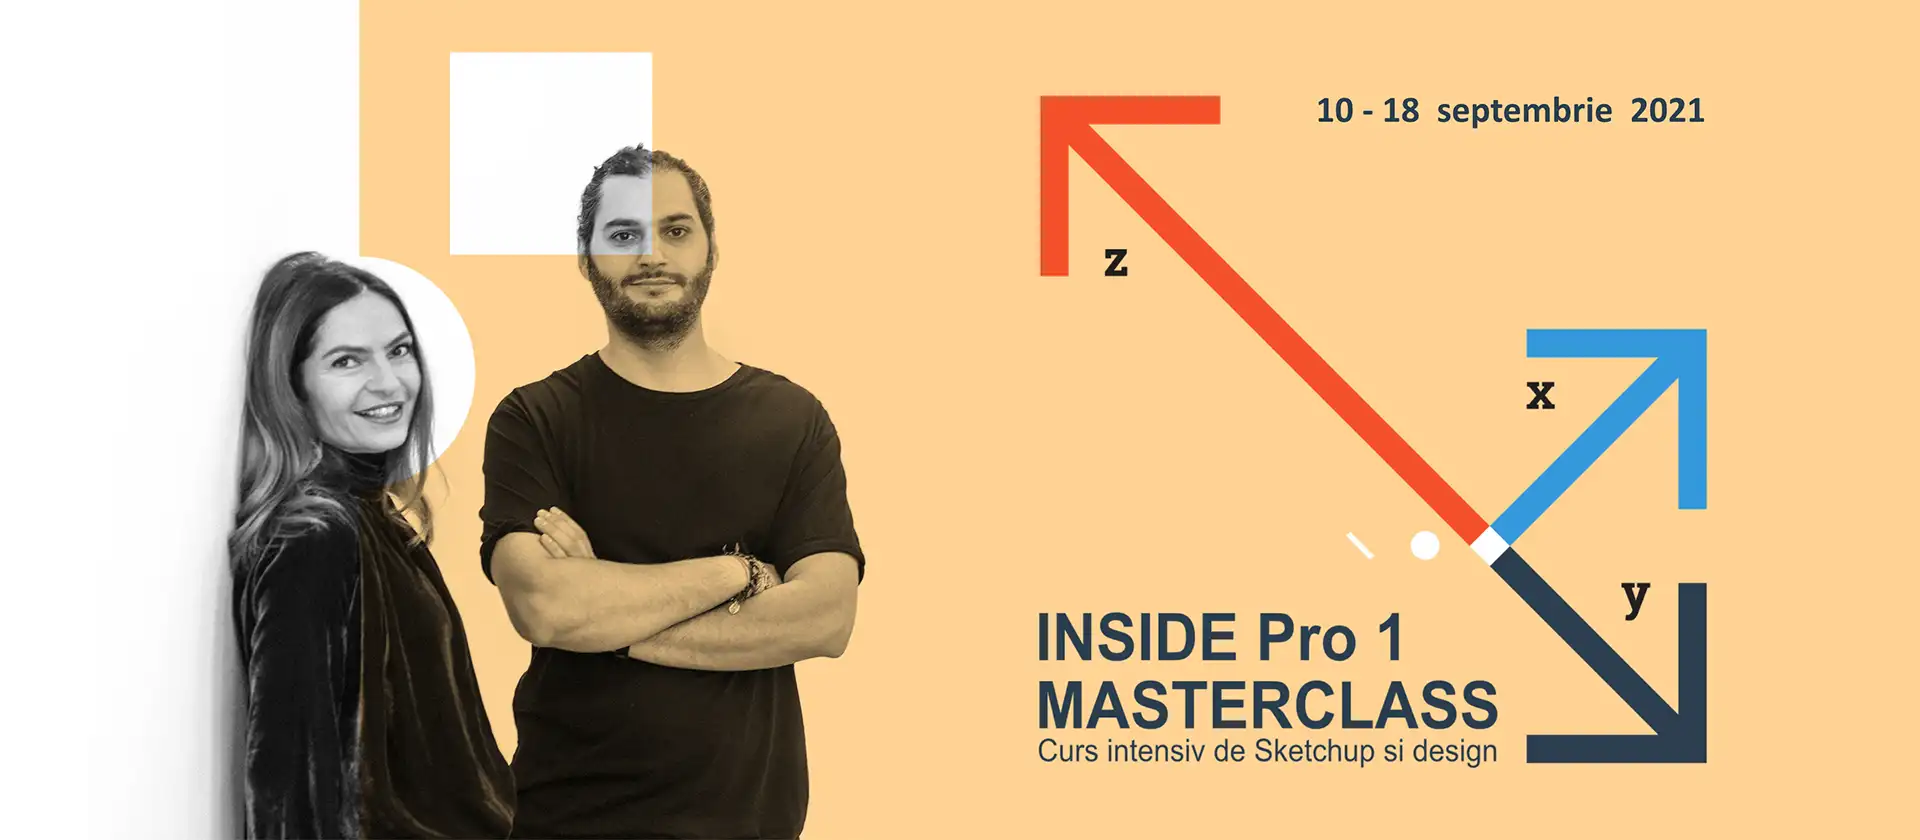 Inside Pro 1 Masterclass